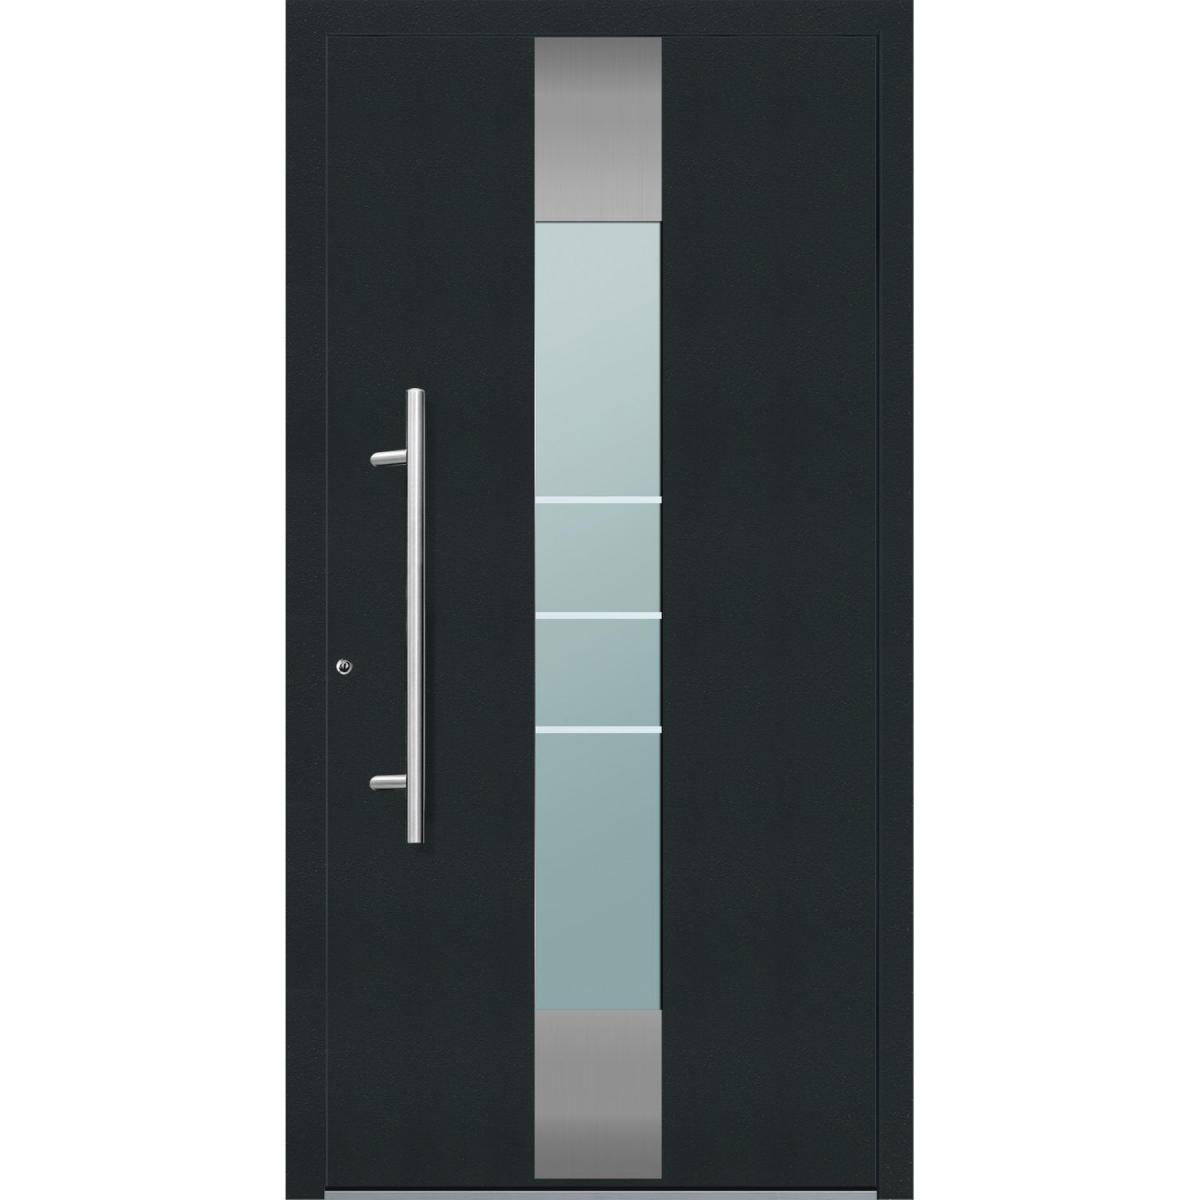 Aluminium Sicherheits-Haustür „Catania Exklusiv“, 75mm, anthrazit, 110x210 cm, Anschlag links, inkl. Griffset